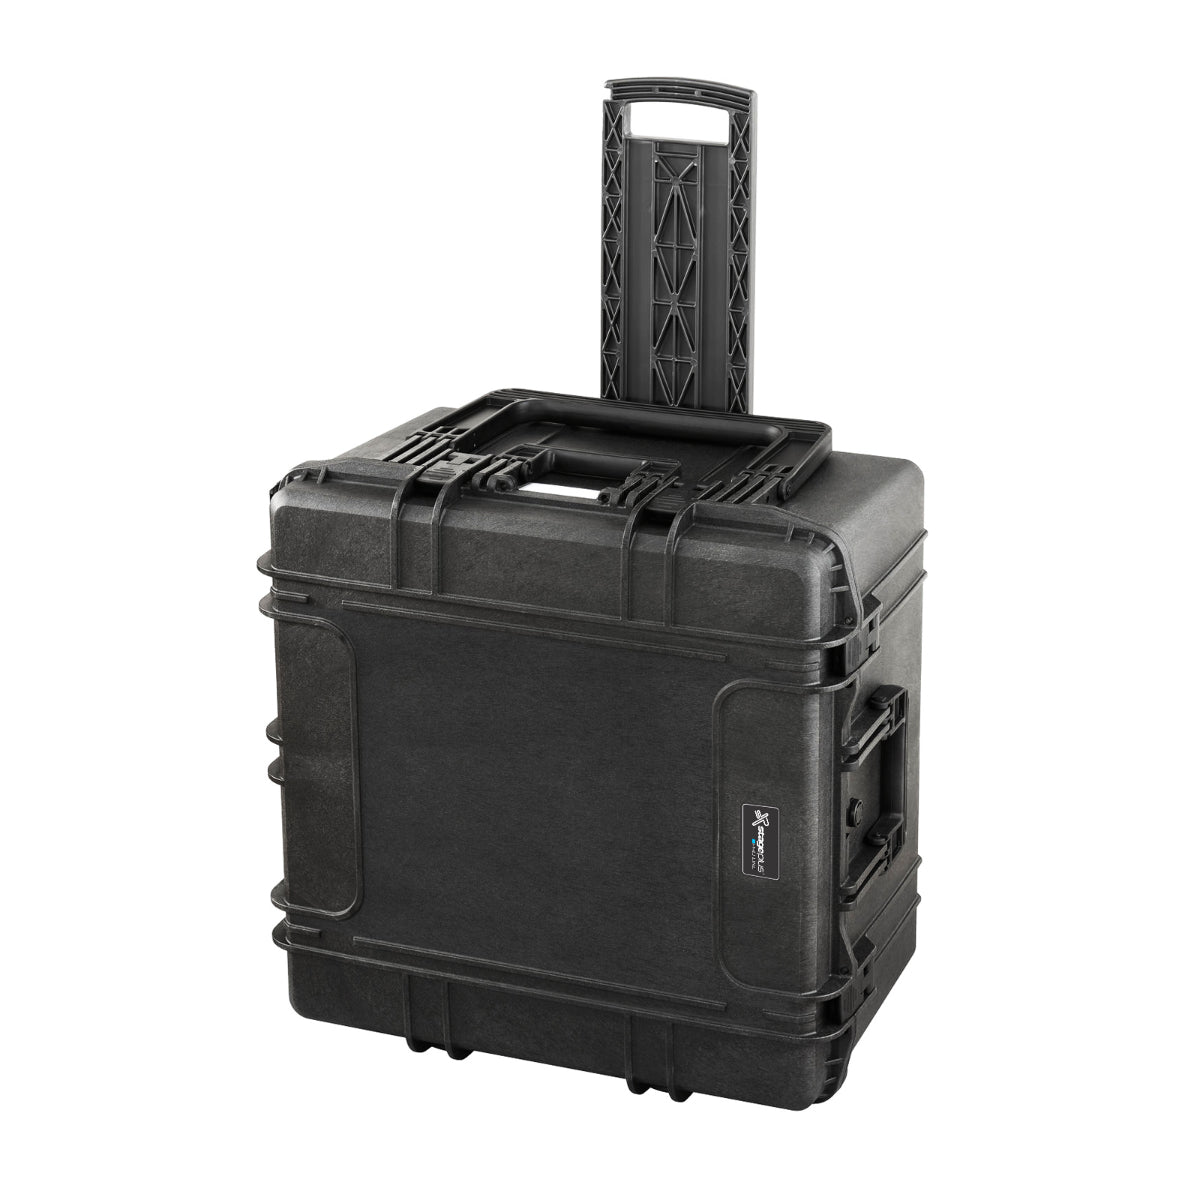 SP PRO 615STR Black Trolley Case, Cubed Foams, ID: L615xW615xH360mm